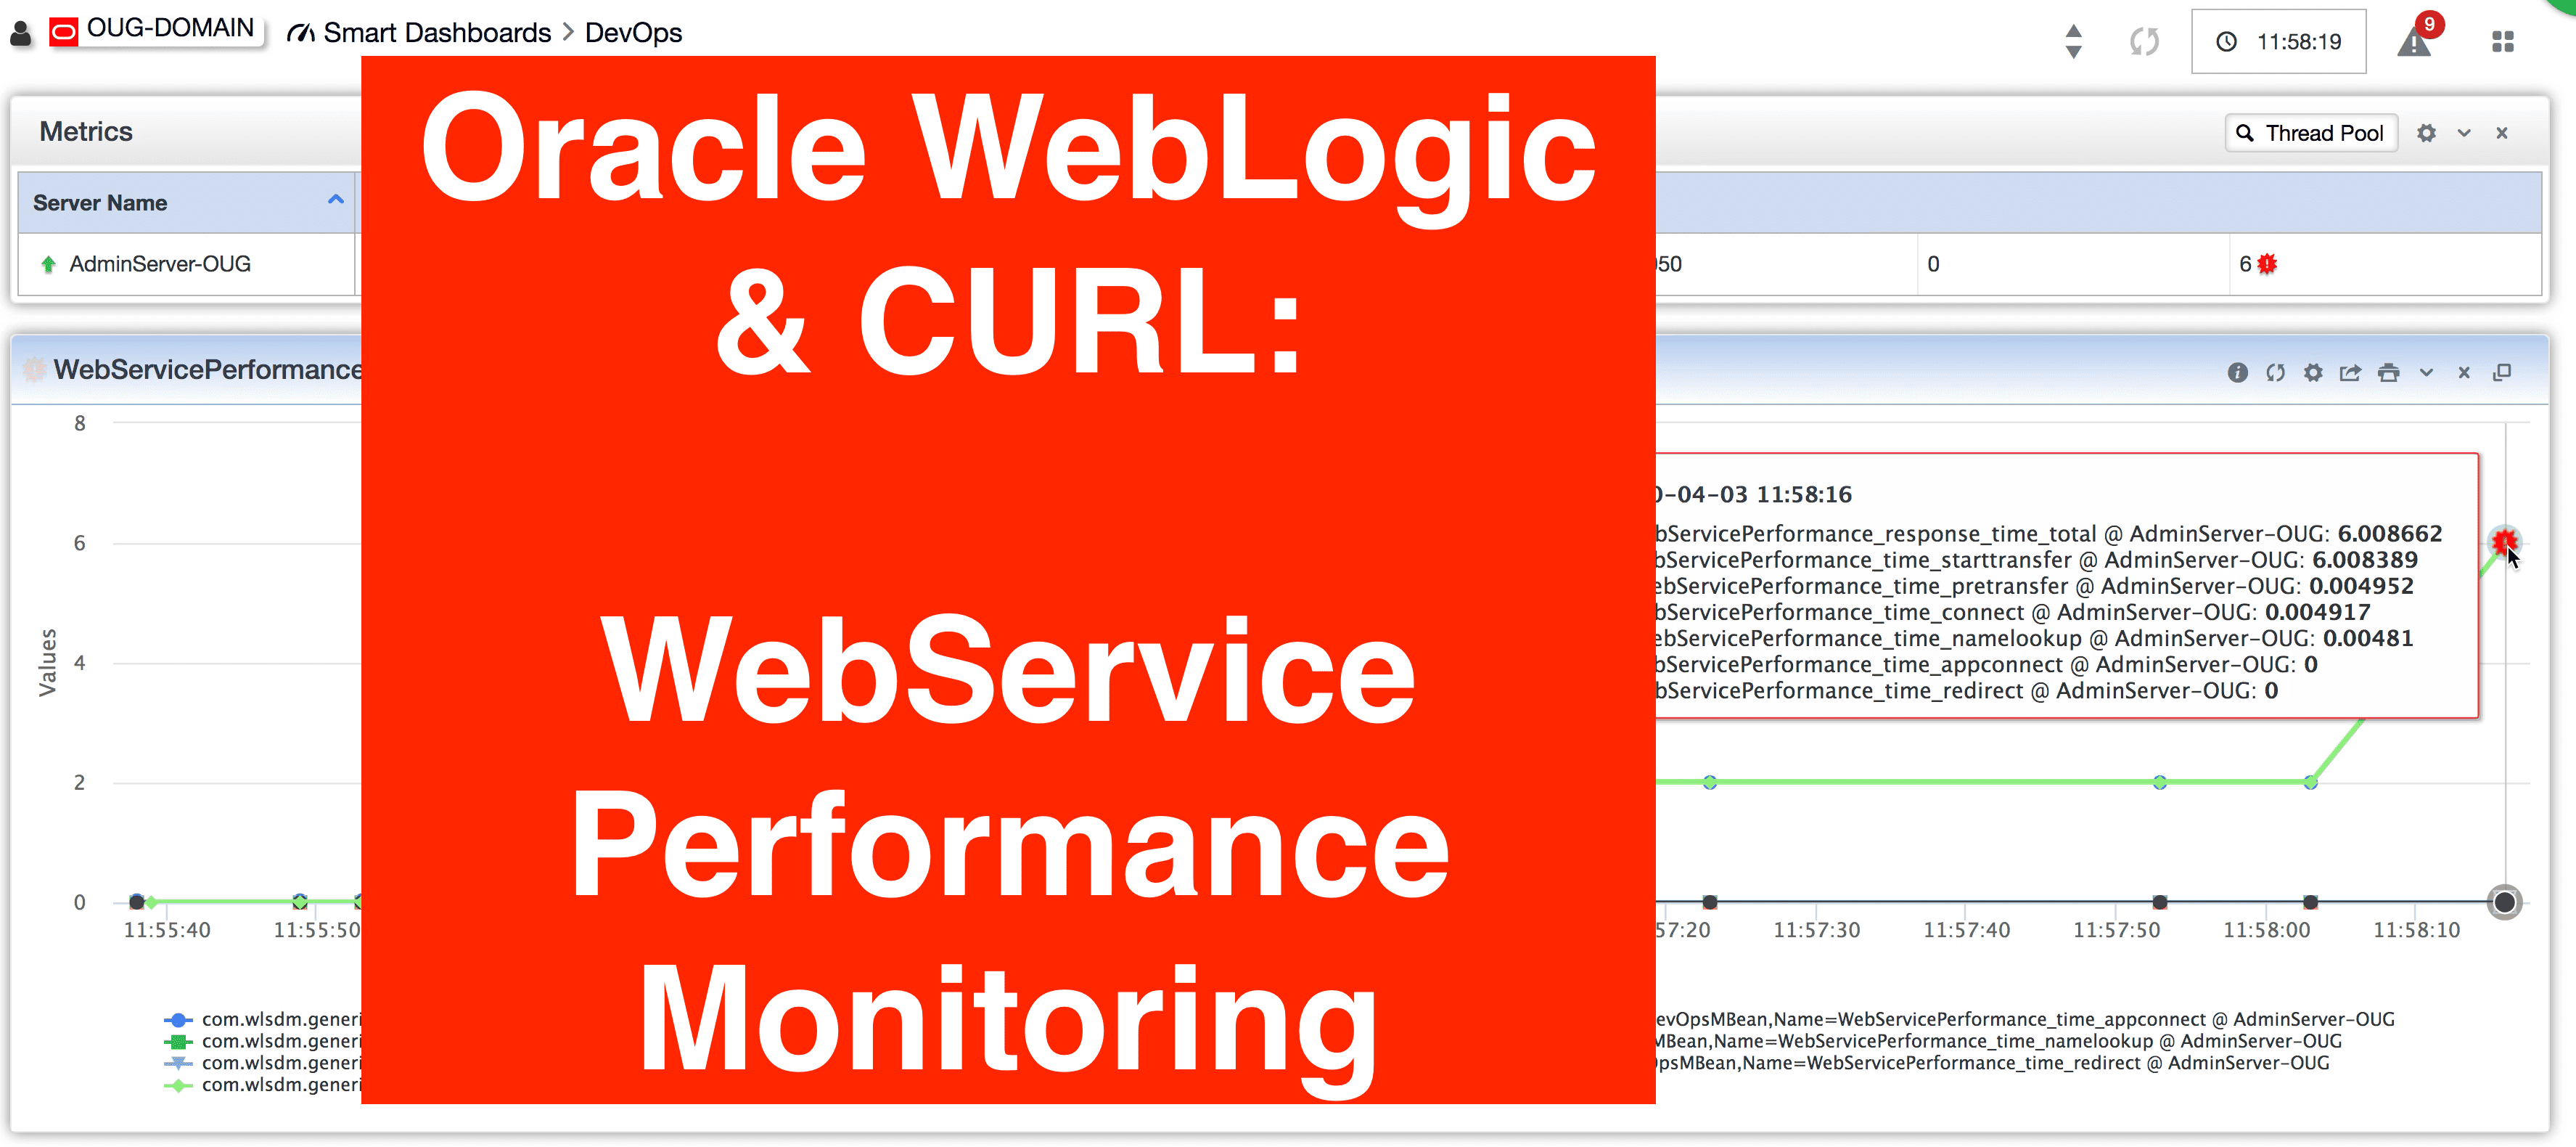 Oracle WebLogic WebService Performance Monitoring